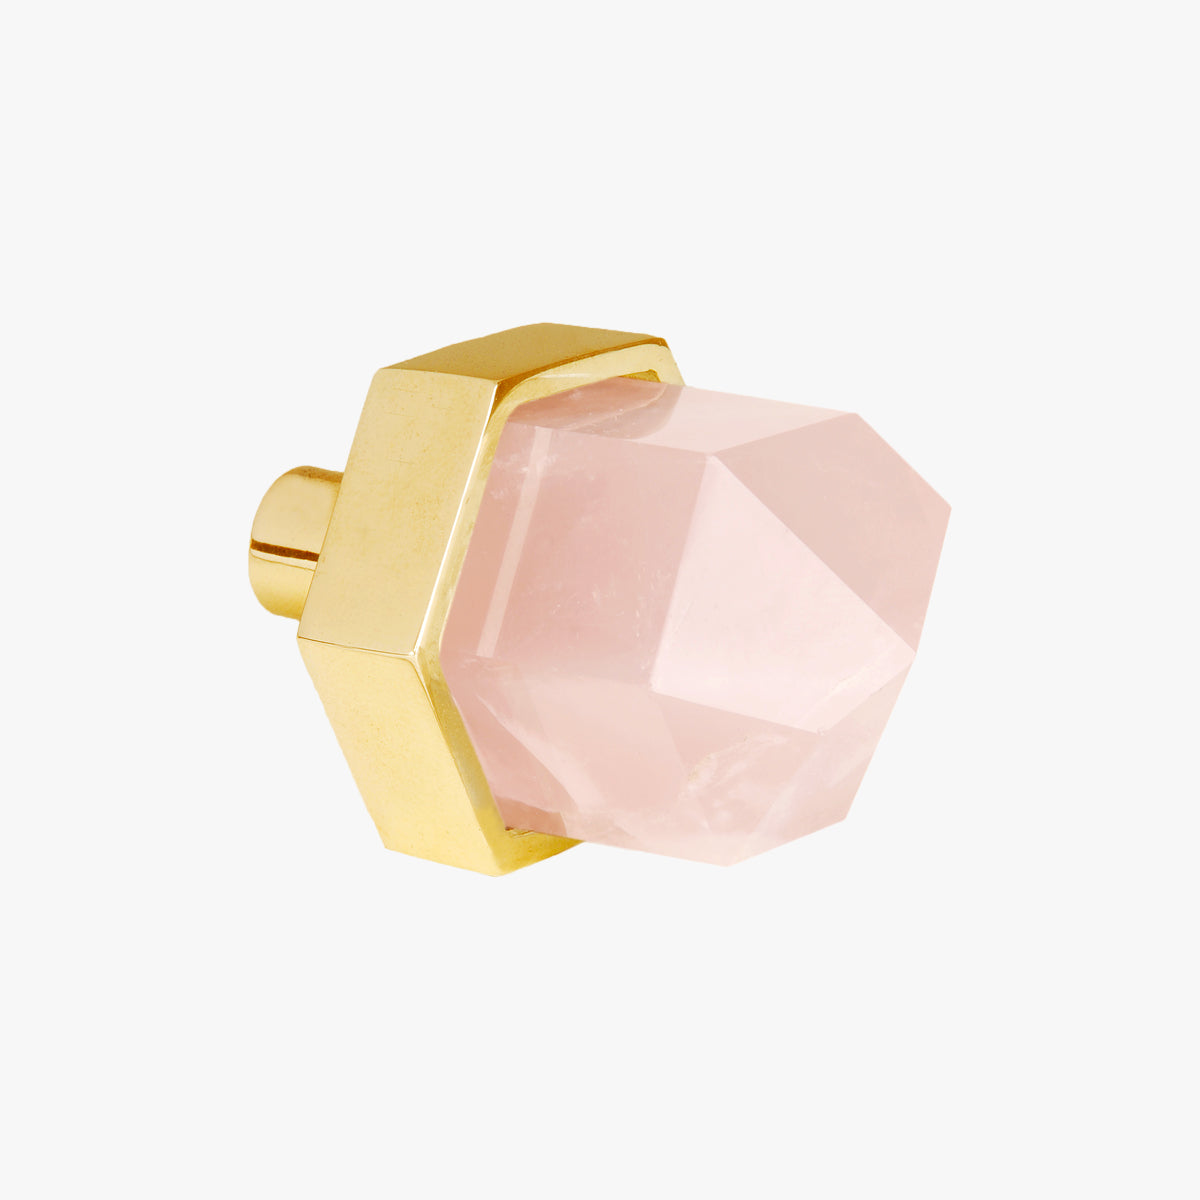 Thea knob handmade rose quartz crystal and polished brass by Matthew Studios